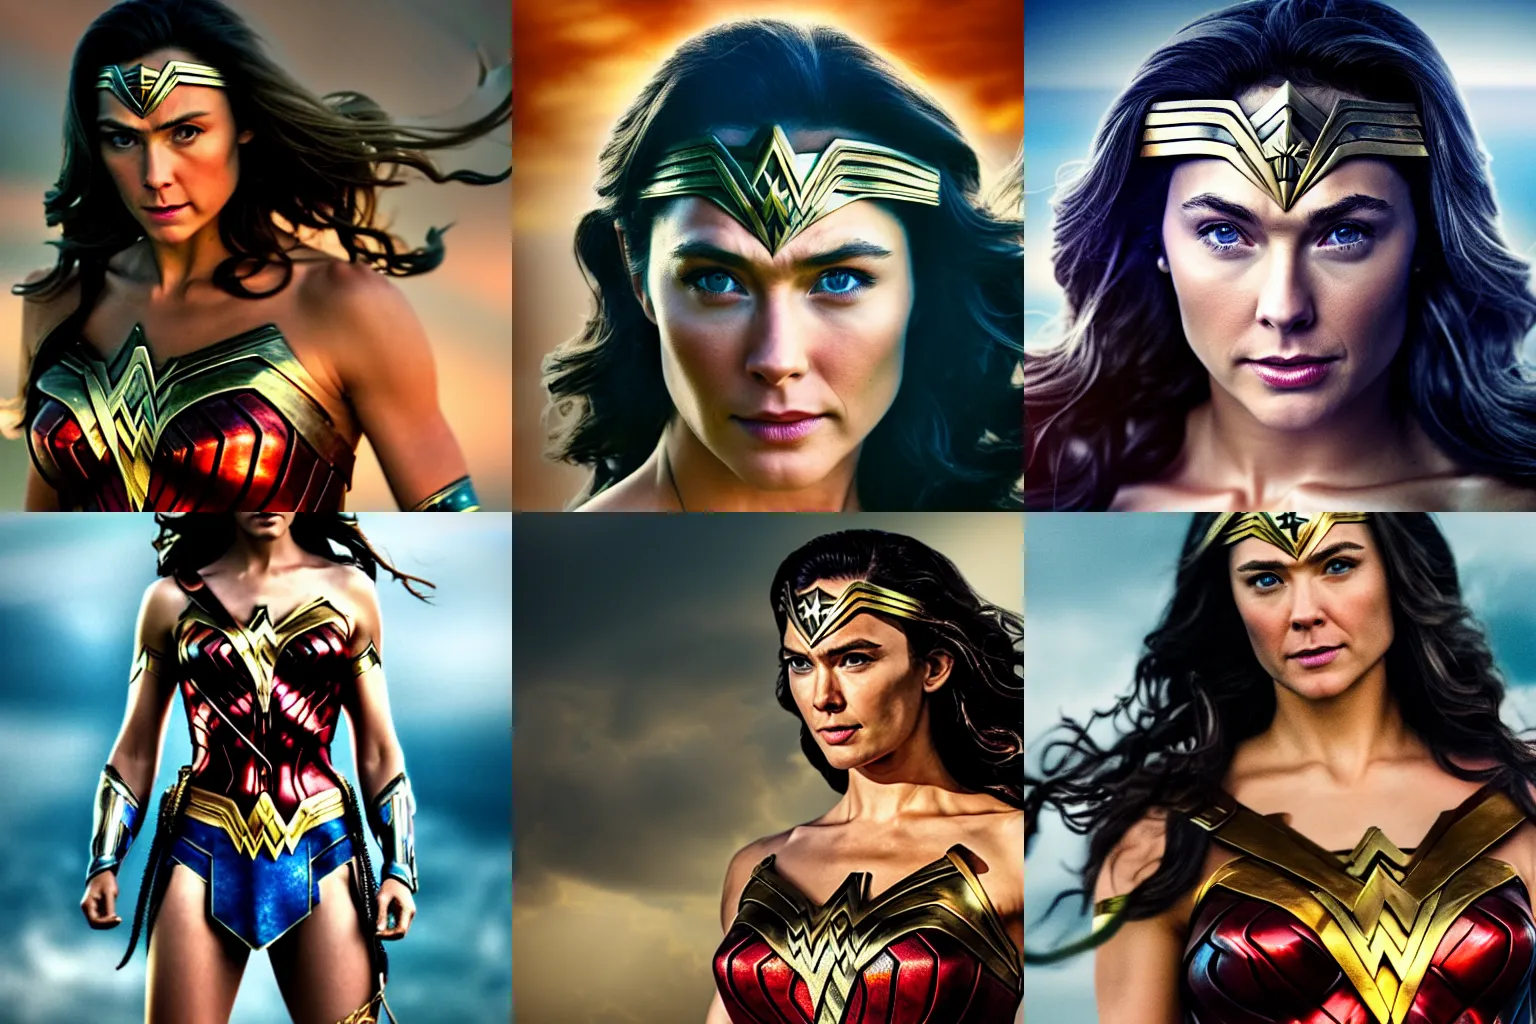 Prompt: a beautiful photograph of Chris Hemsworth as Wonder Woman, color photograph, 4k